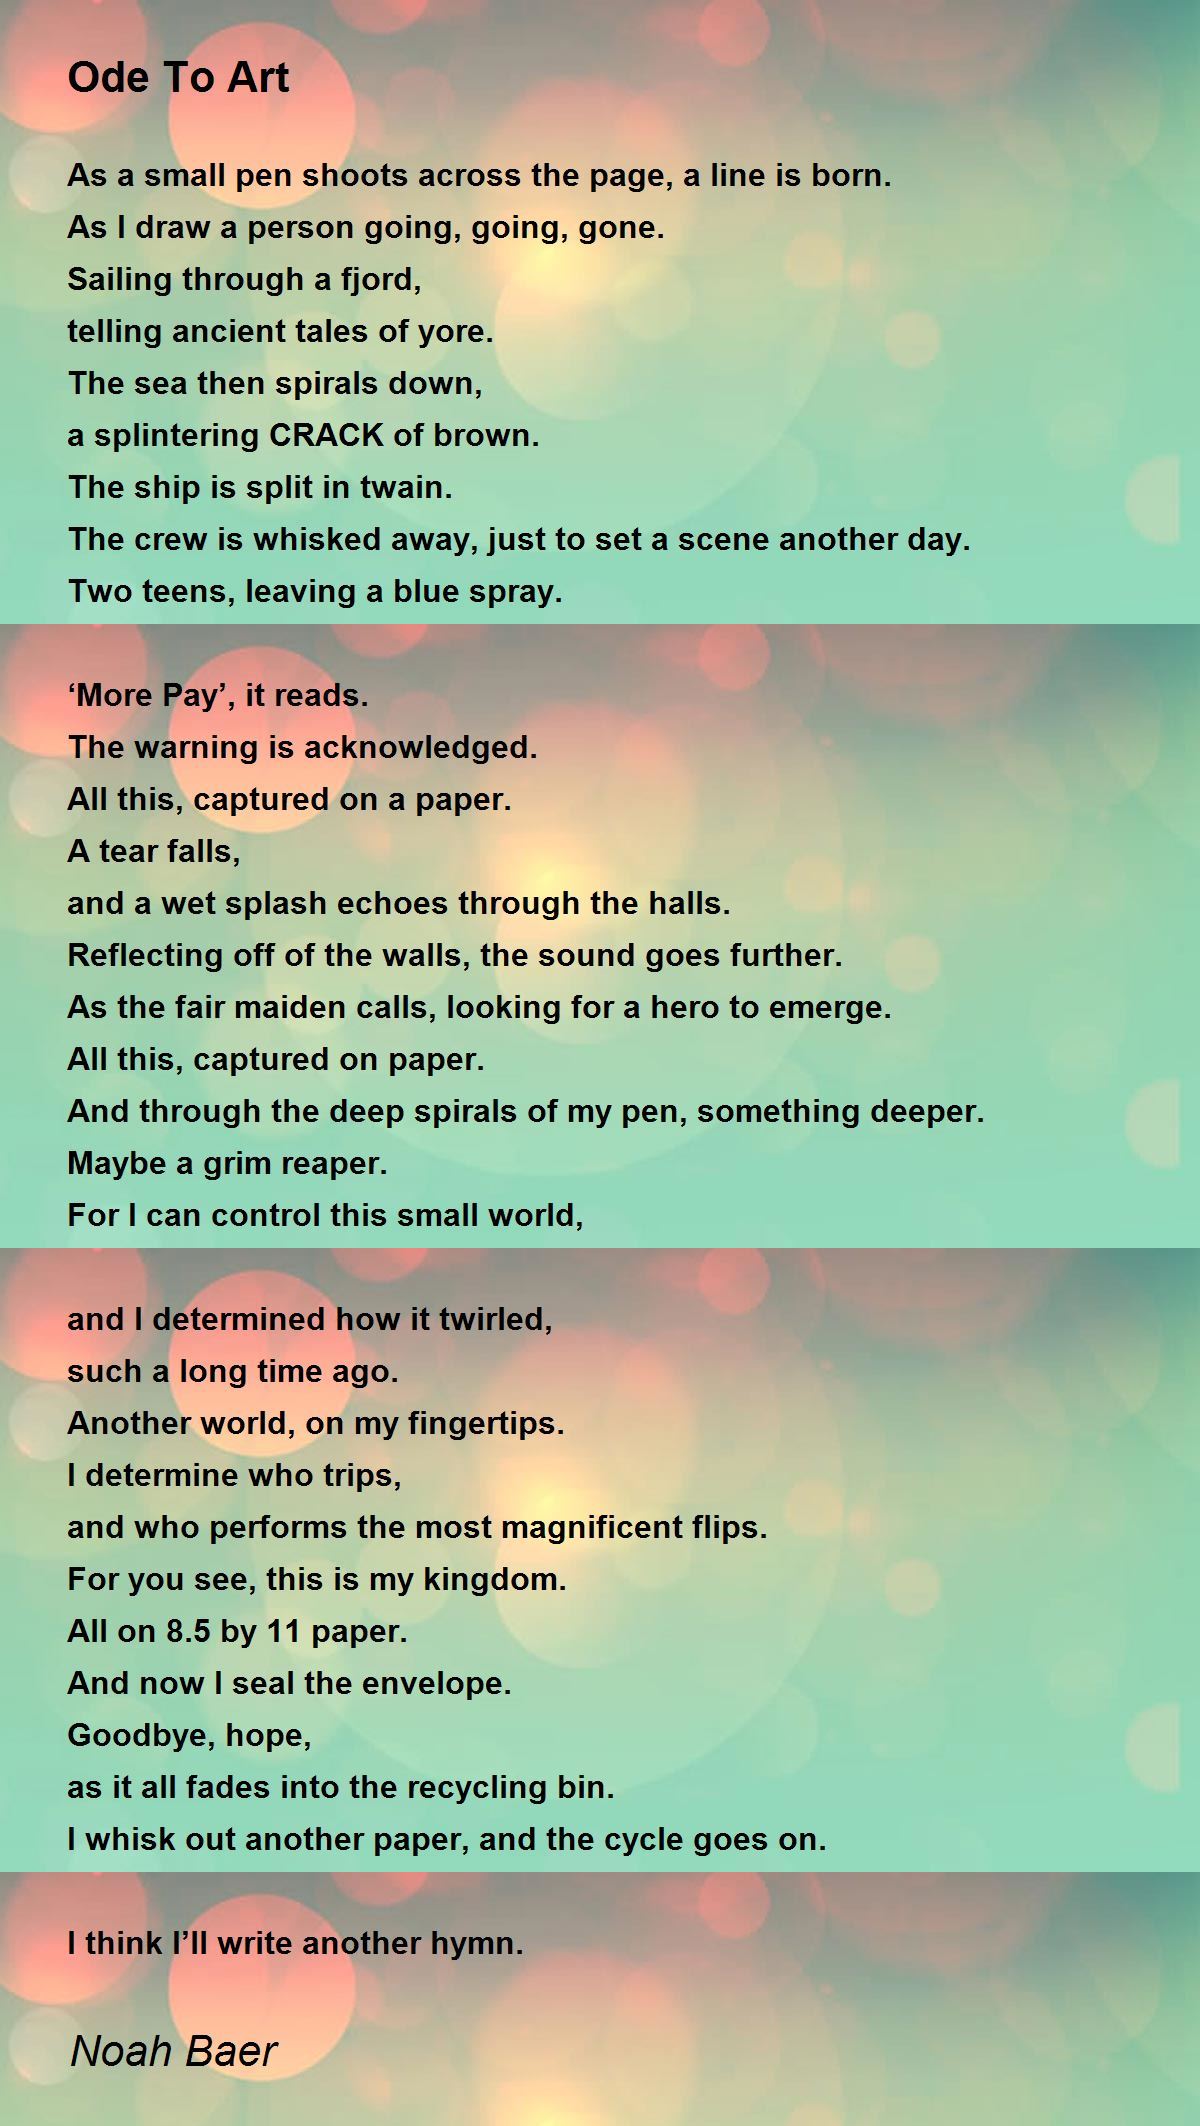 Ode To Art by Noah Baer - Ode To Art Poem